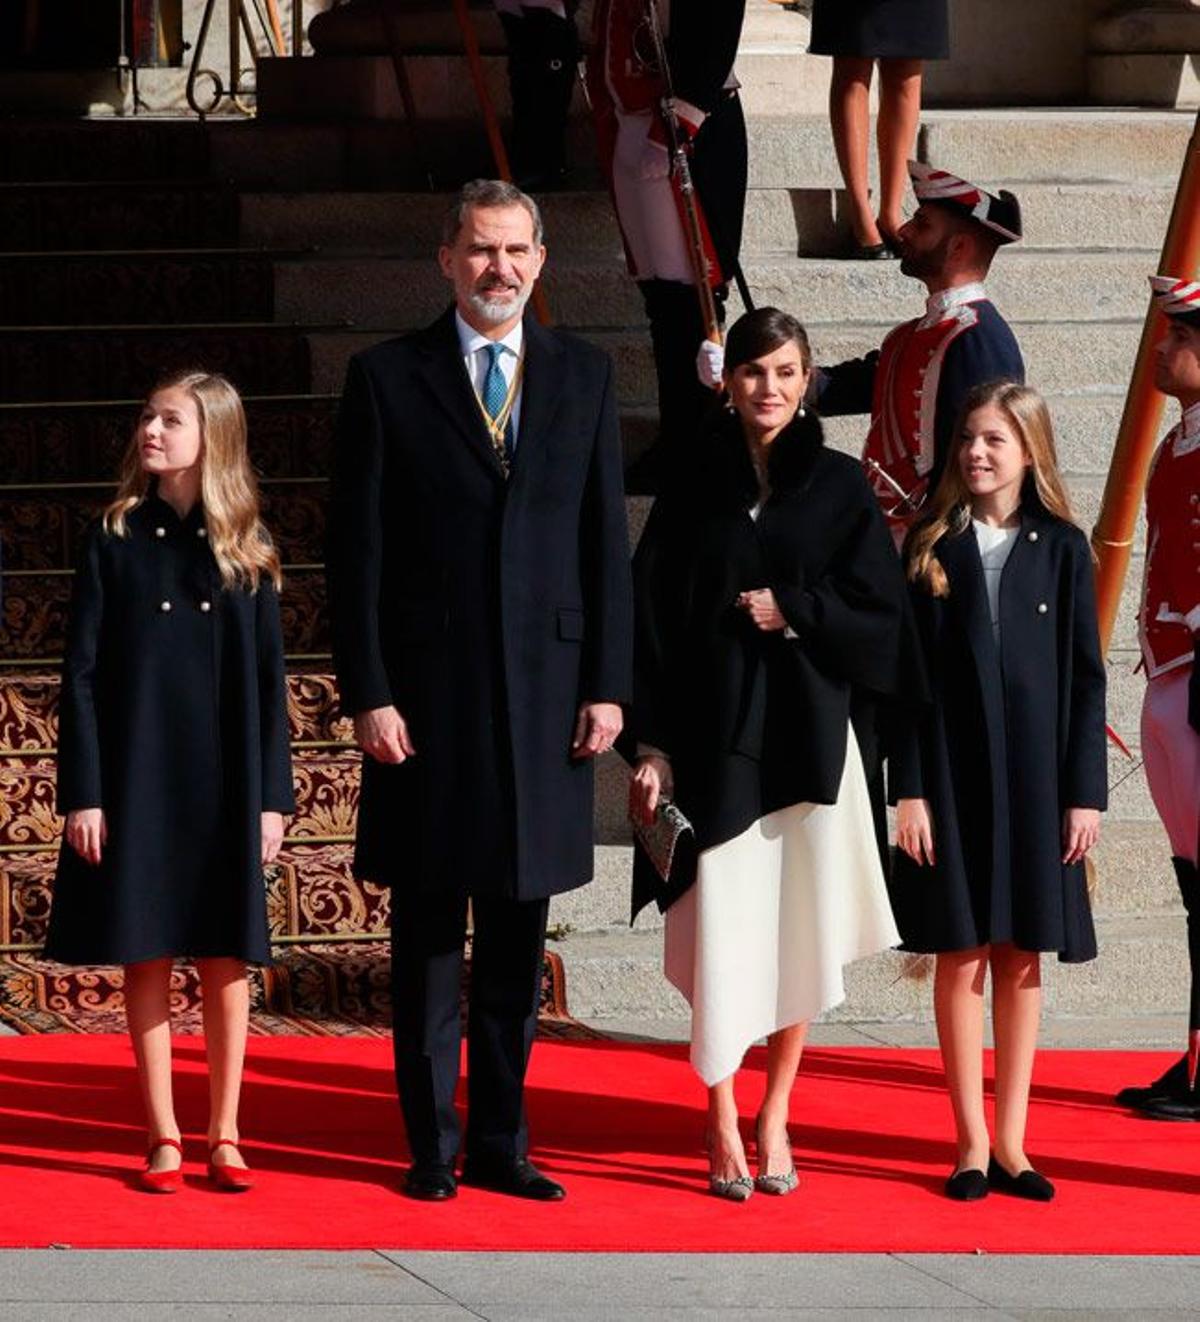 La Familia Real en la ceremonia de apertura de la XIV Legislatura